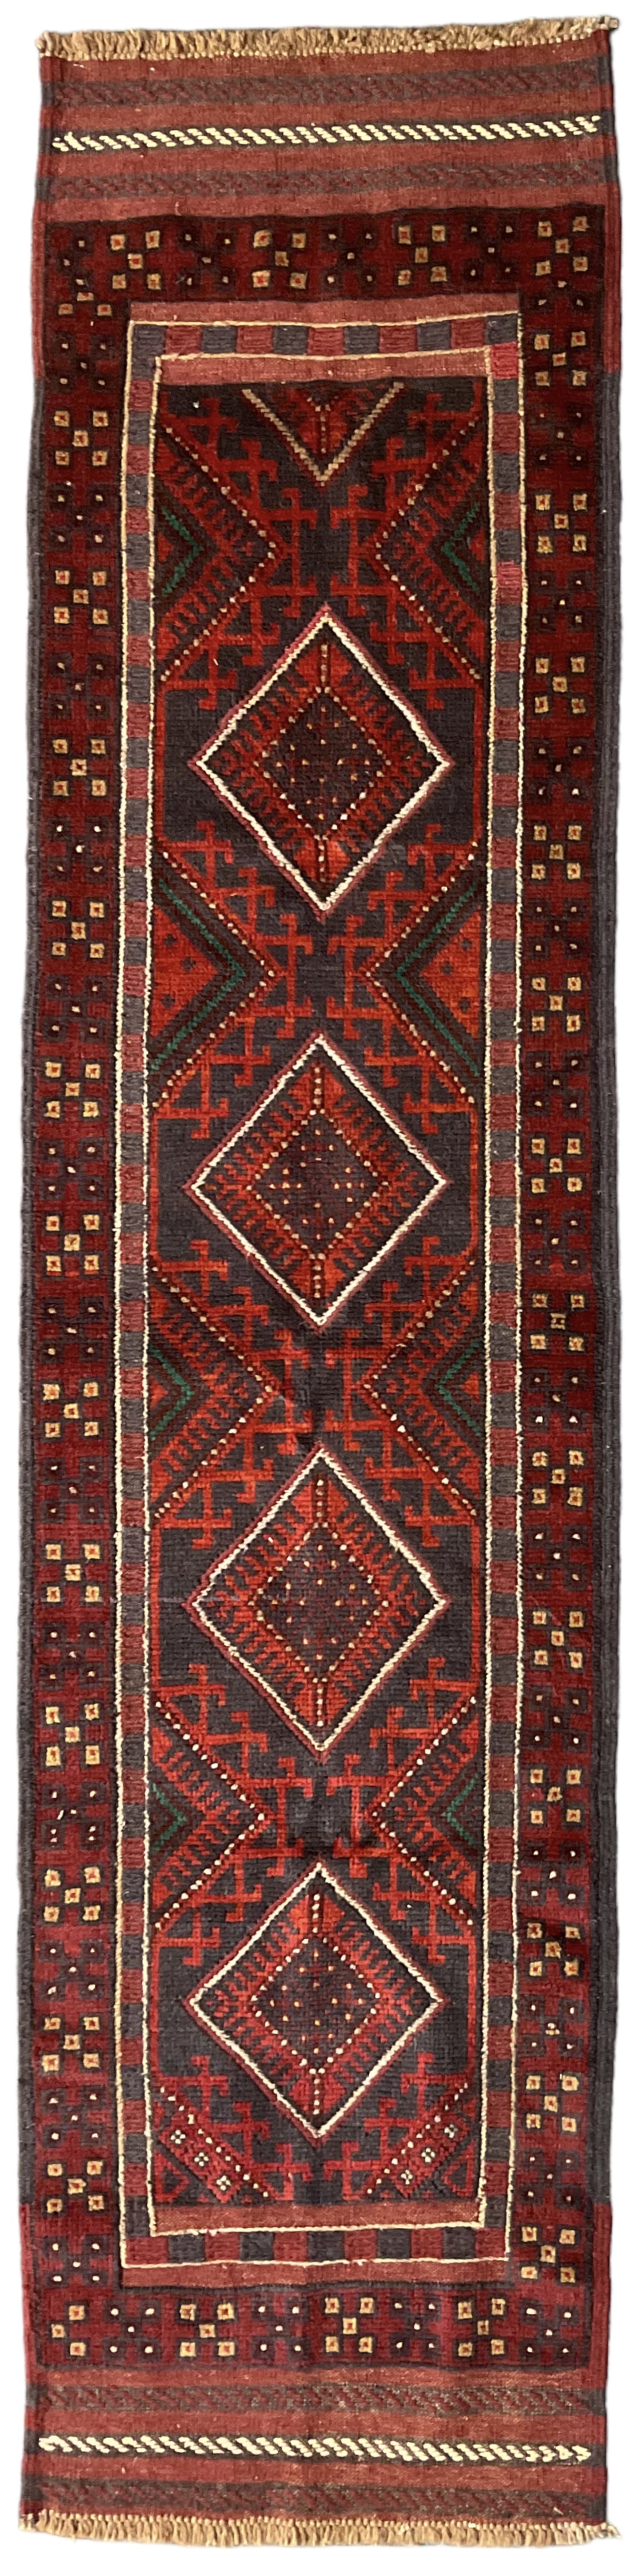 Meshwani Kilim maroon ground runner rug